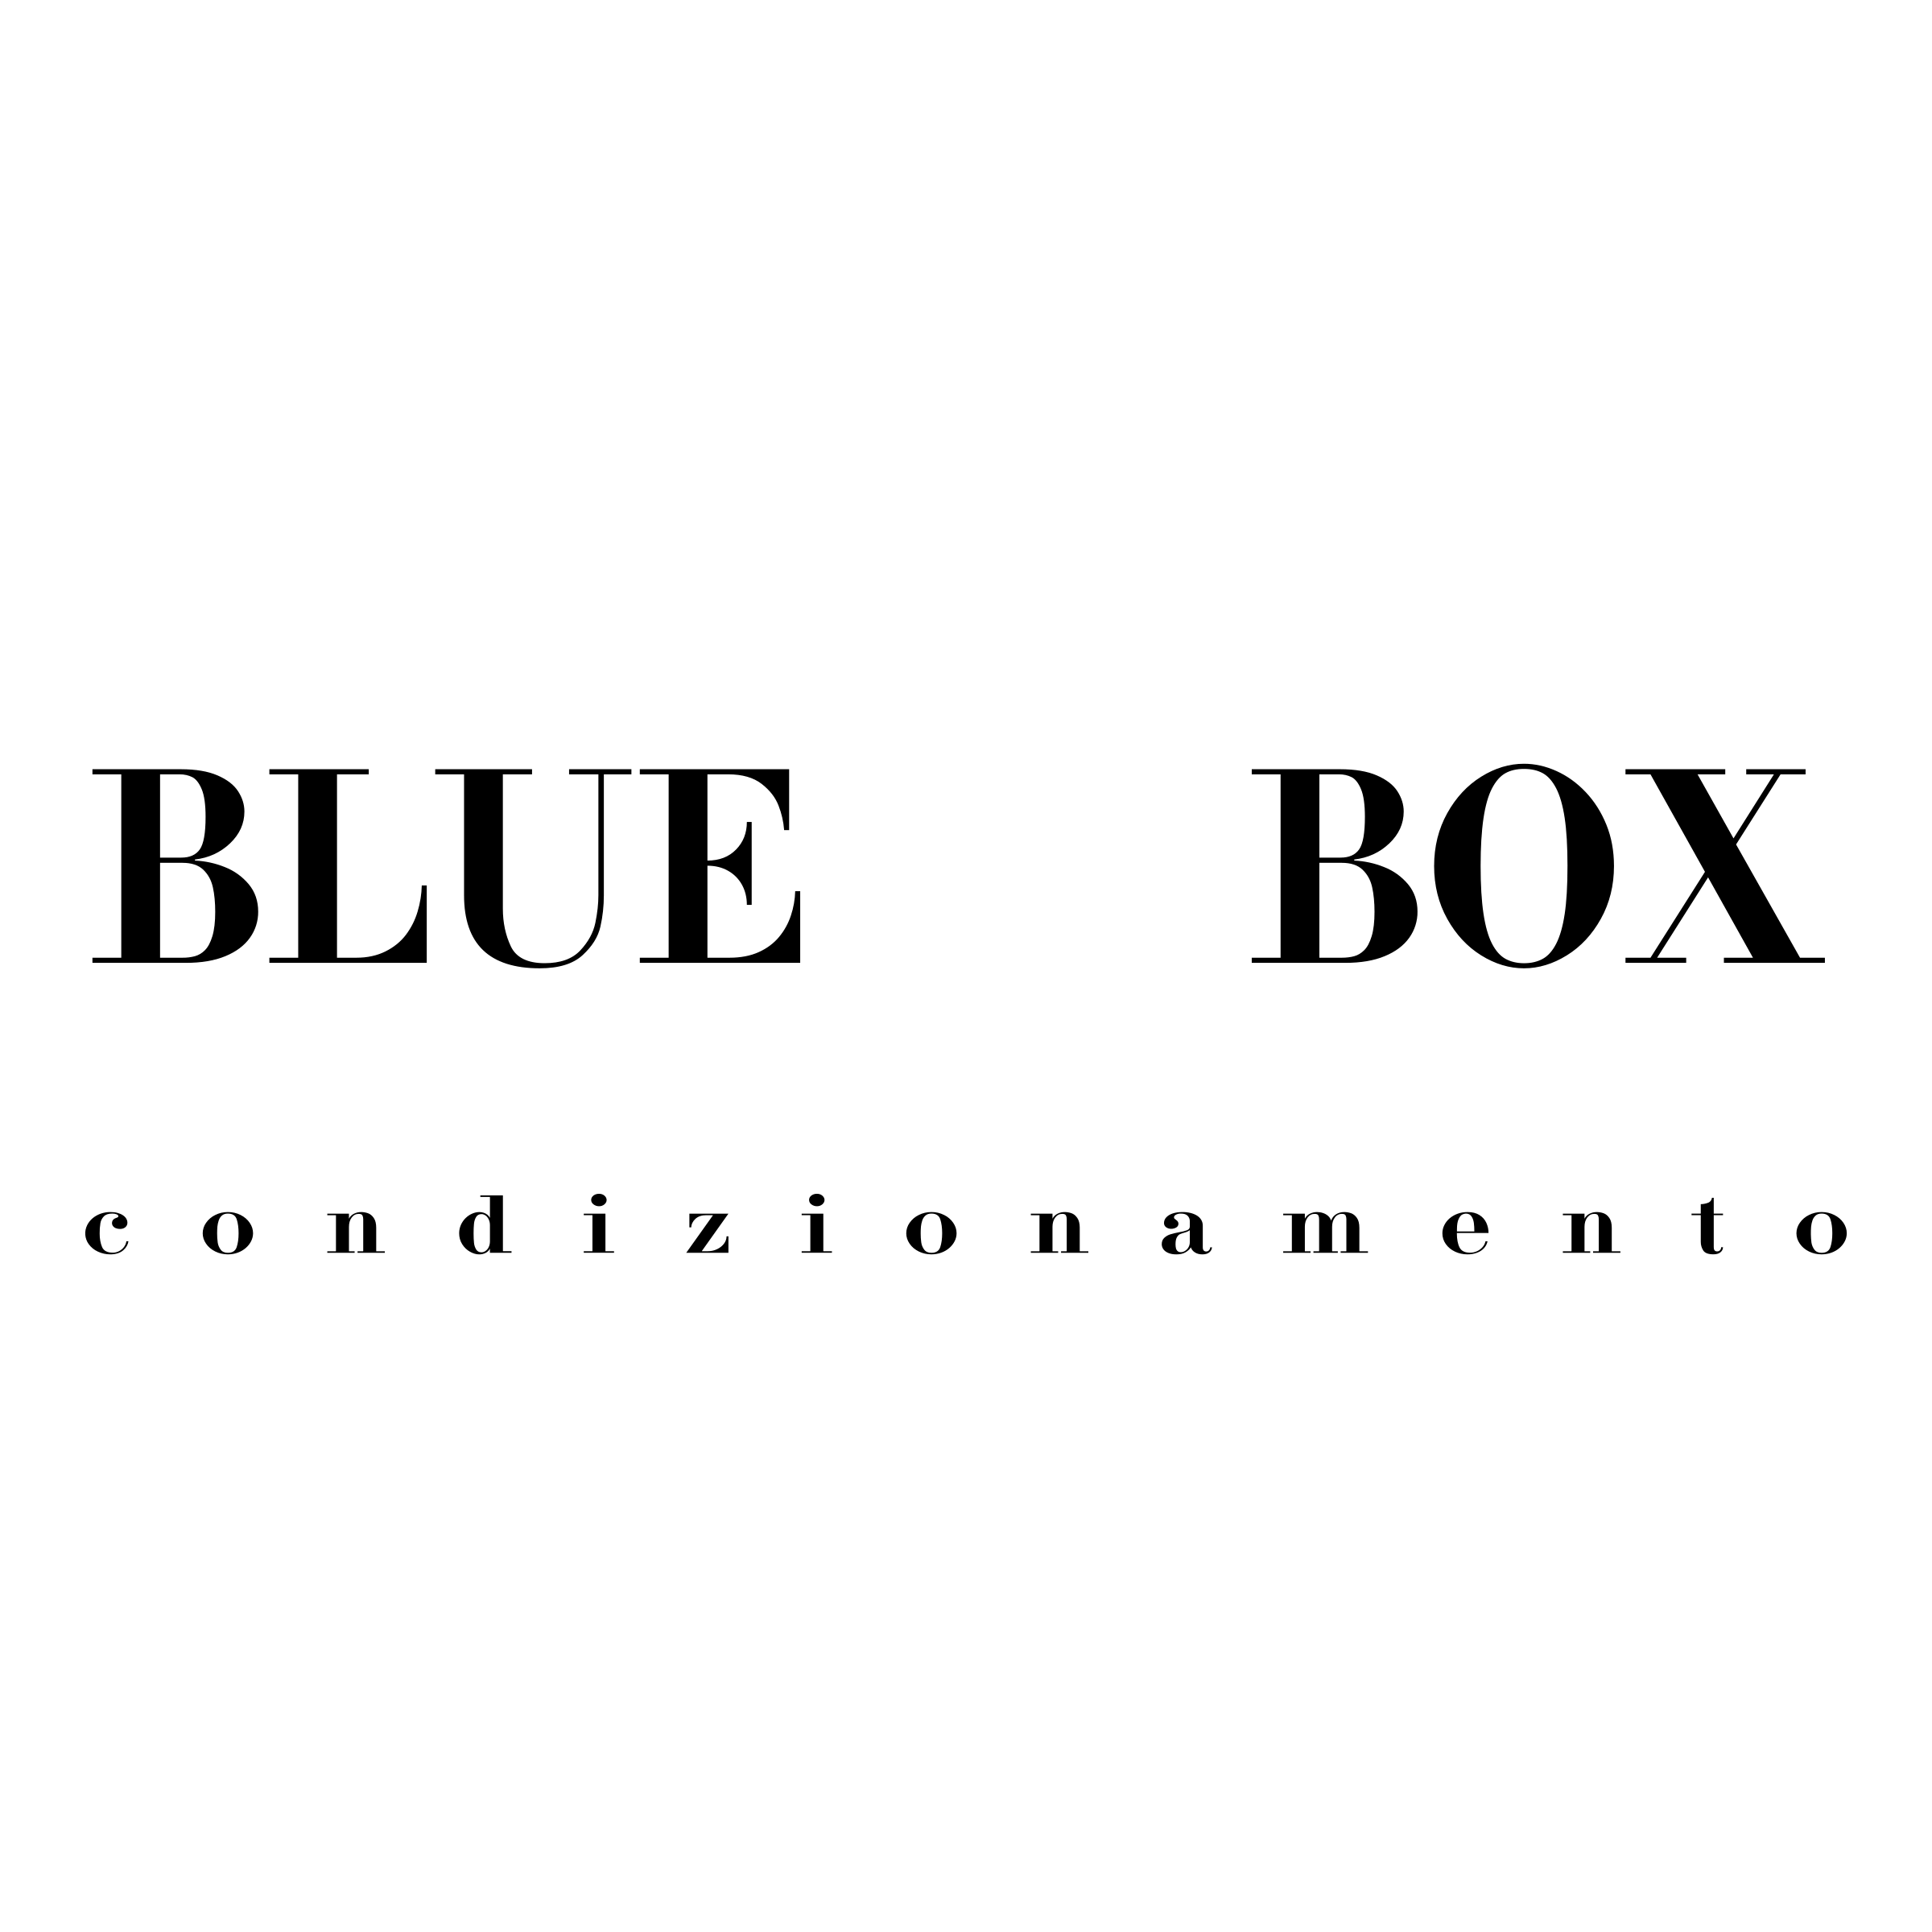 White a Blue Box Logo - Blue Box Logo PNG Transparent & SVG Vector - Freebie Supply